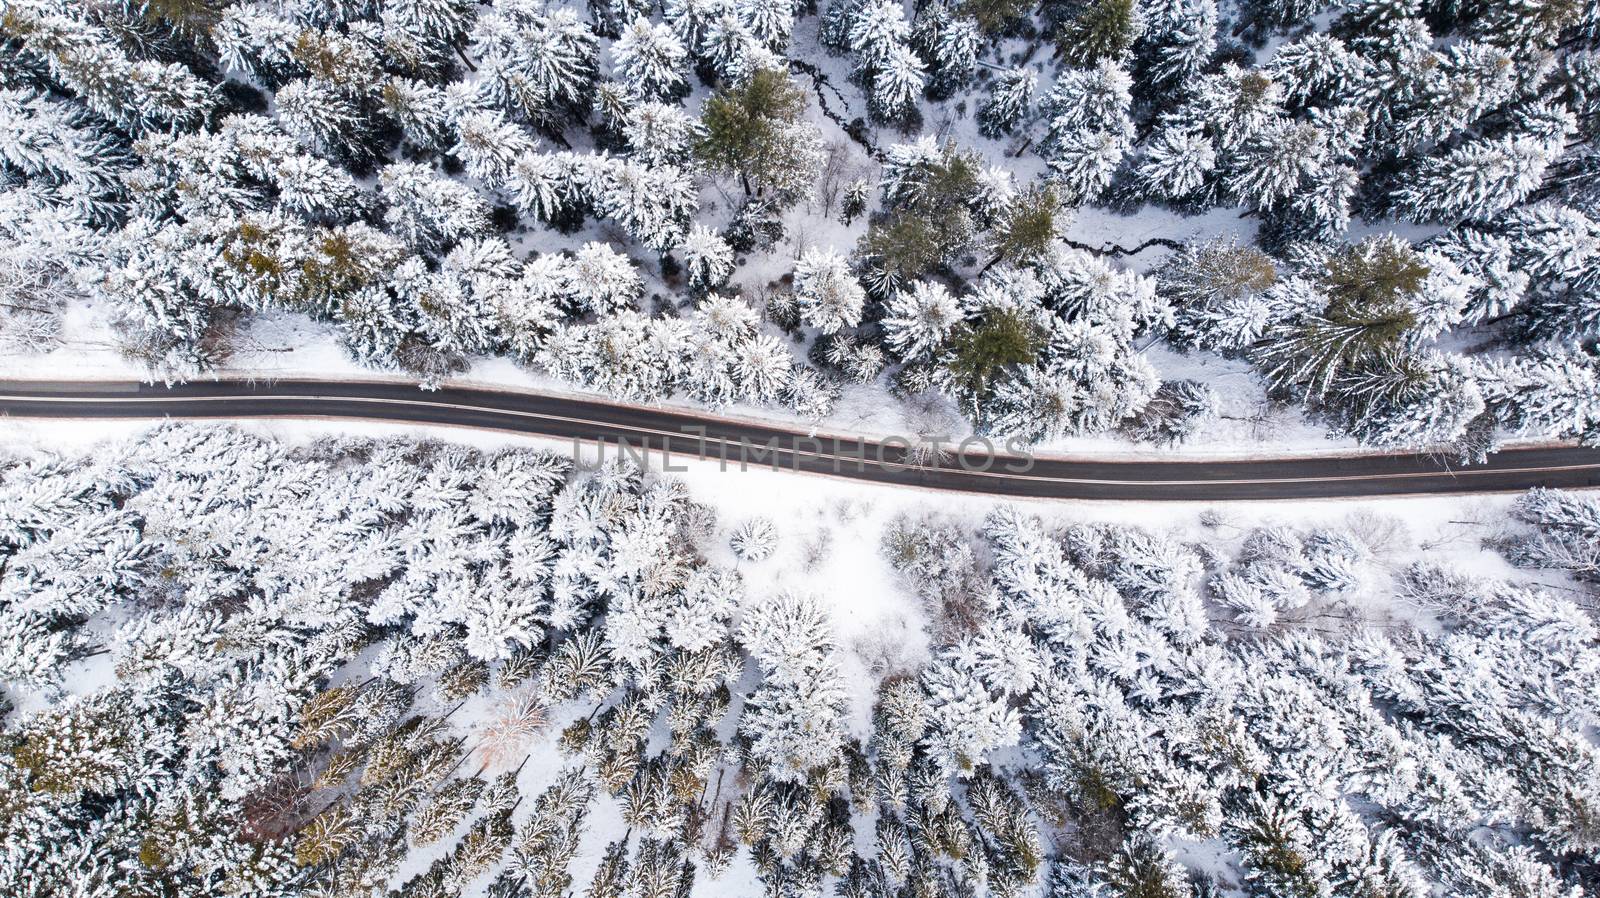 Road Trough Winter Wonderland, Top Down Drone View by merc67